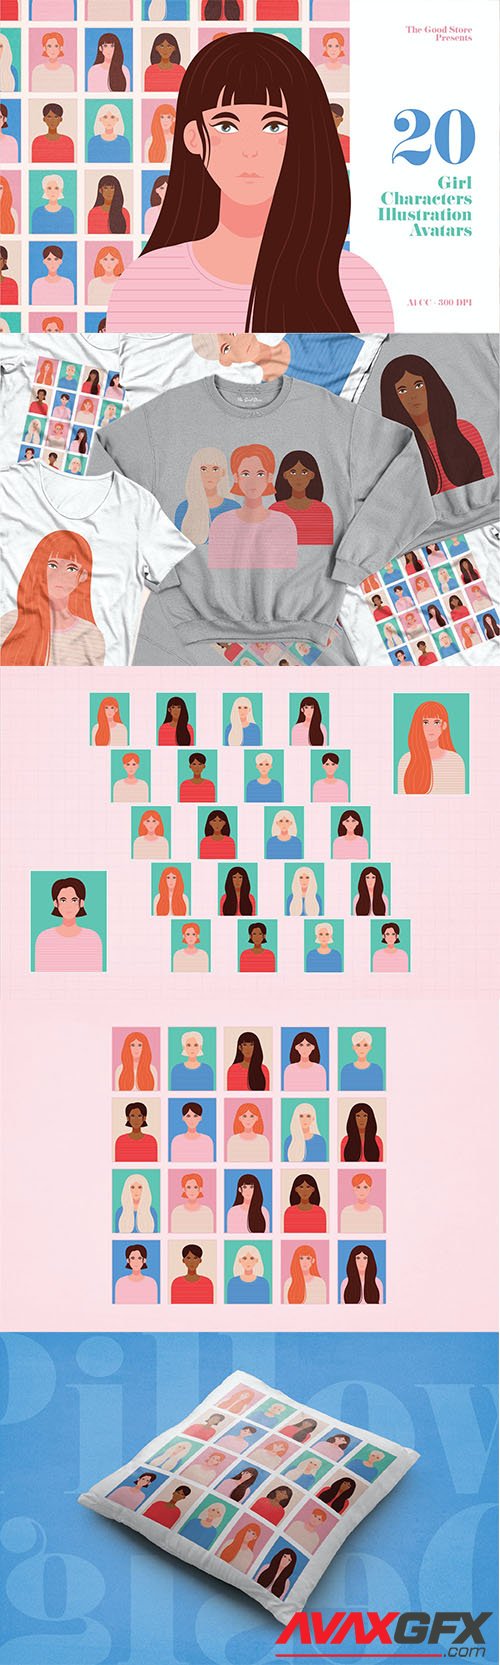 Girl Fashion Characters Vector Illustration Avatars